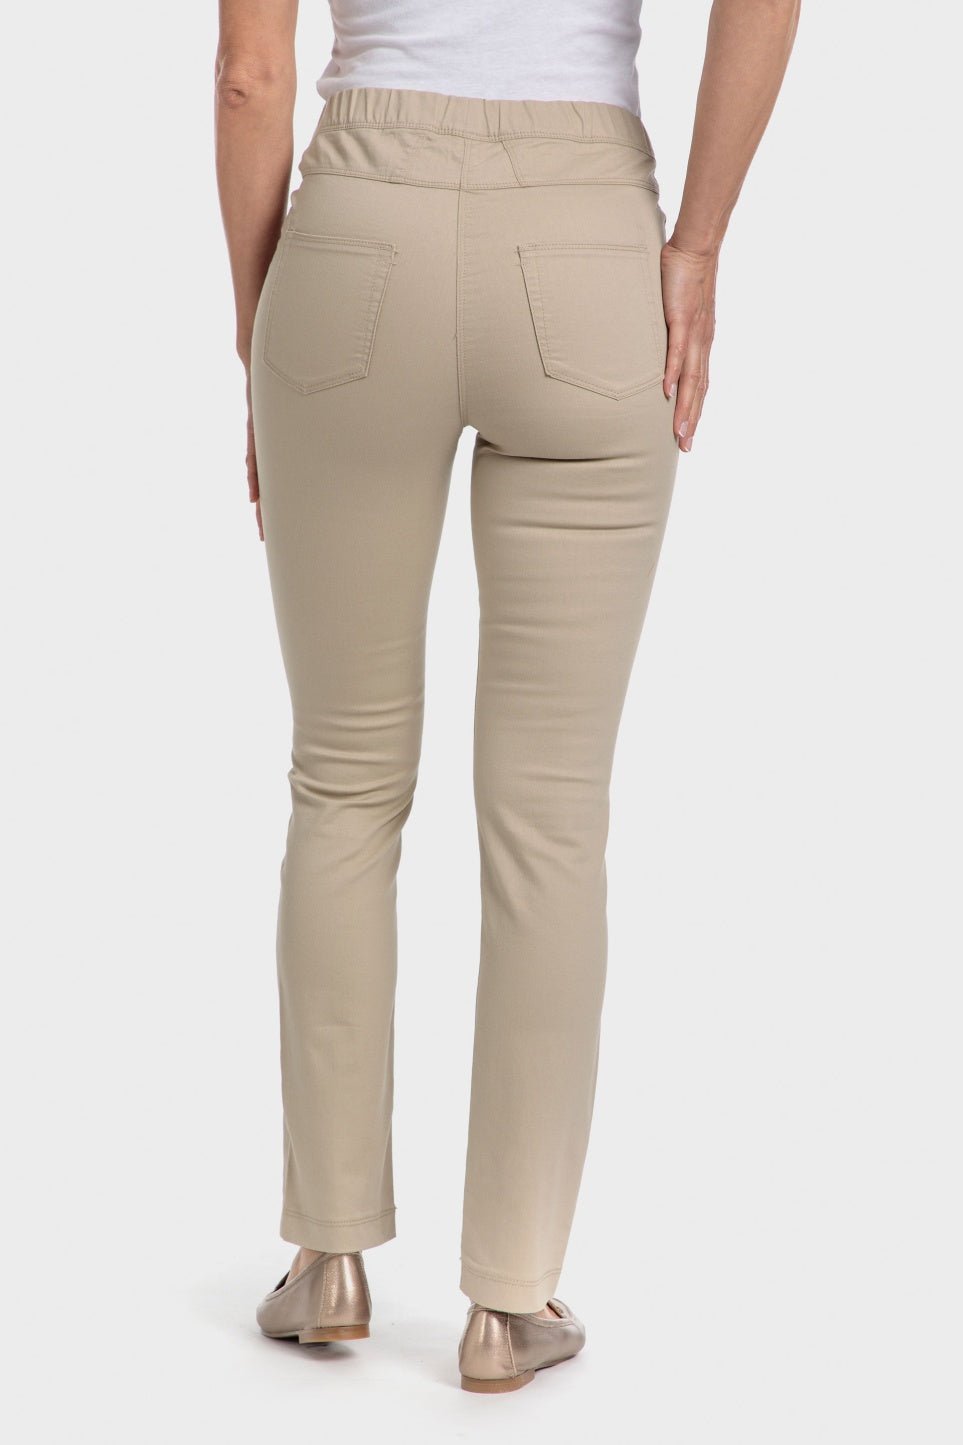 PUNT ROMA - מכנסי טוויל לנשים בצבע בז' - MASHBIR//365